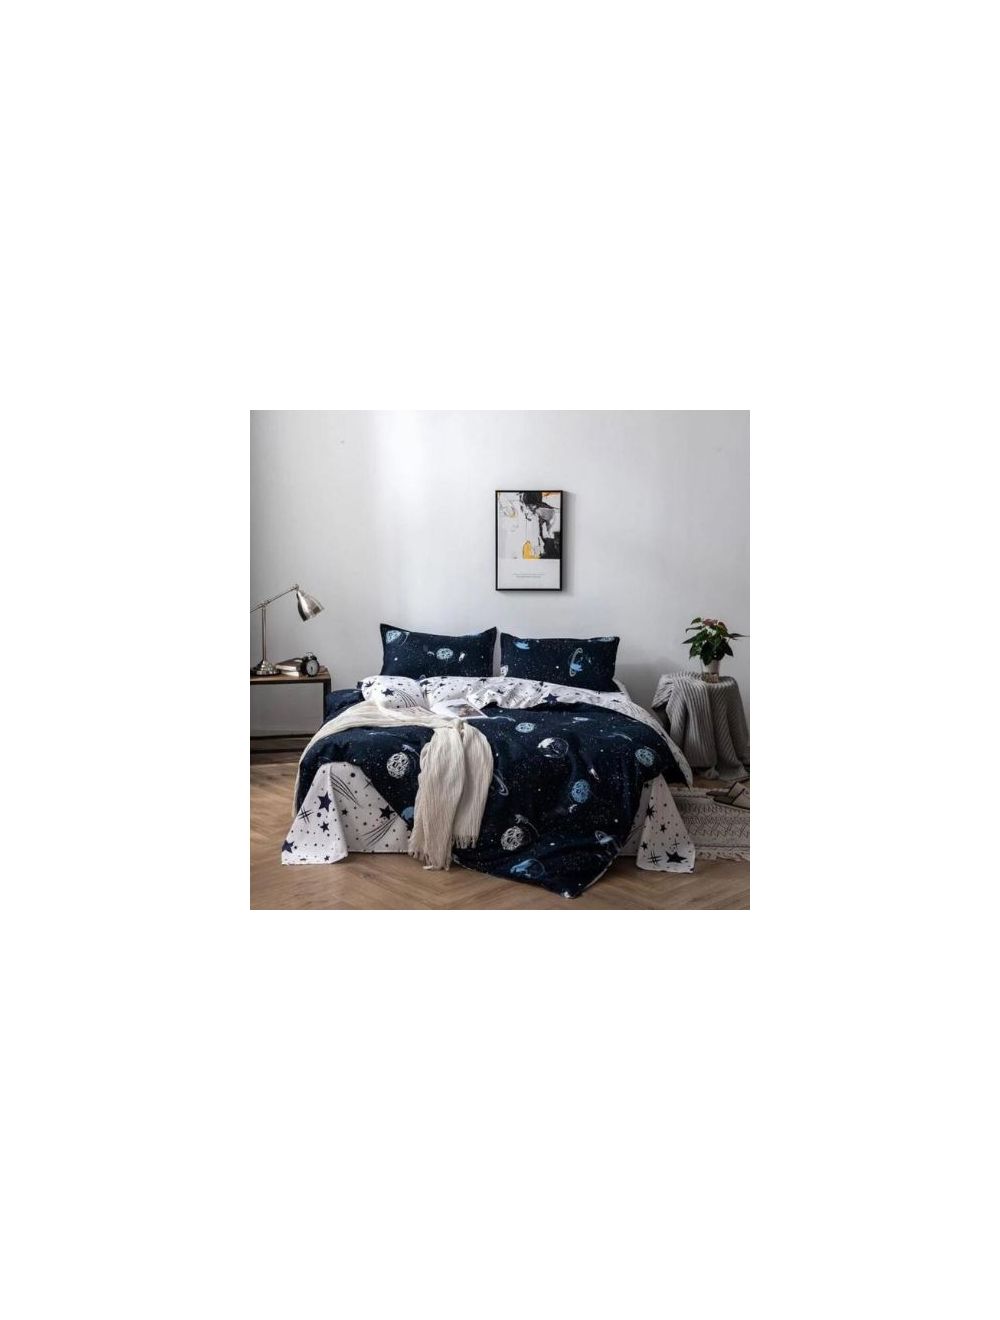 DEALS FOR LESS - Queen/double Size, Duvet Cover, Bedding Set Of 6 Pieces,  Galaxy Design, 1 Duvet Cover + 1 Bedsheet + 4 Pillow Covers.-hz10-14d